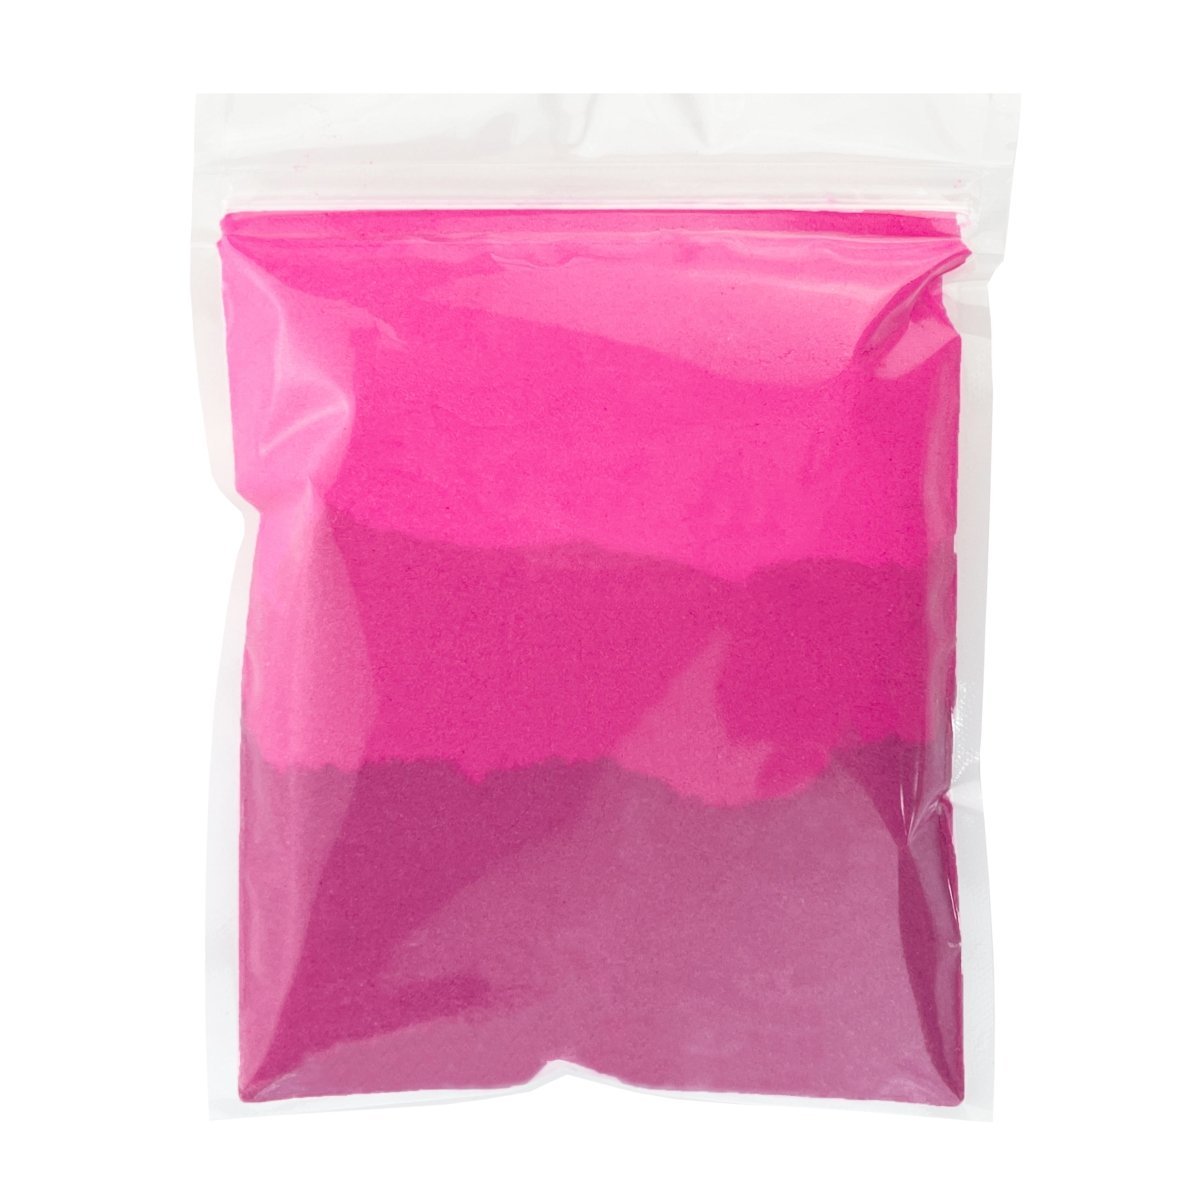 La Fraise Bath Dust for Kids & Adults - Colourful Glitters & Strawberry Fragrance - Made in Australia by Bath Box